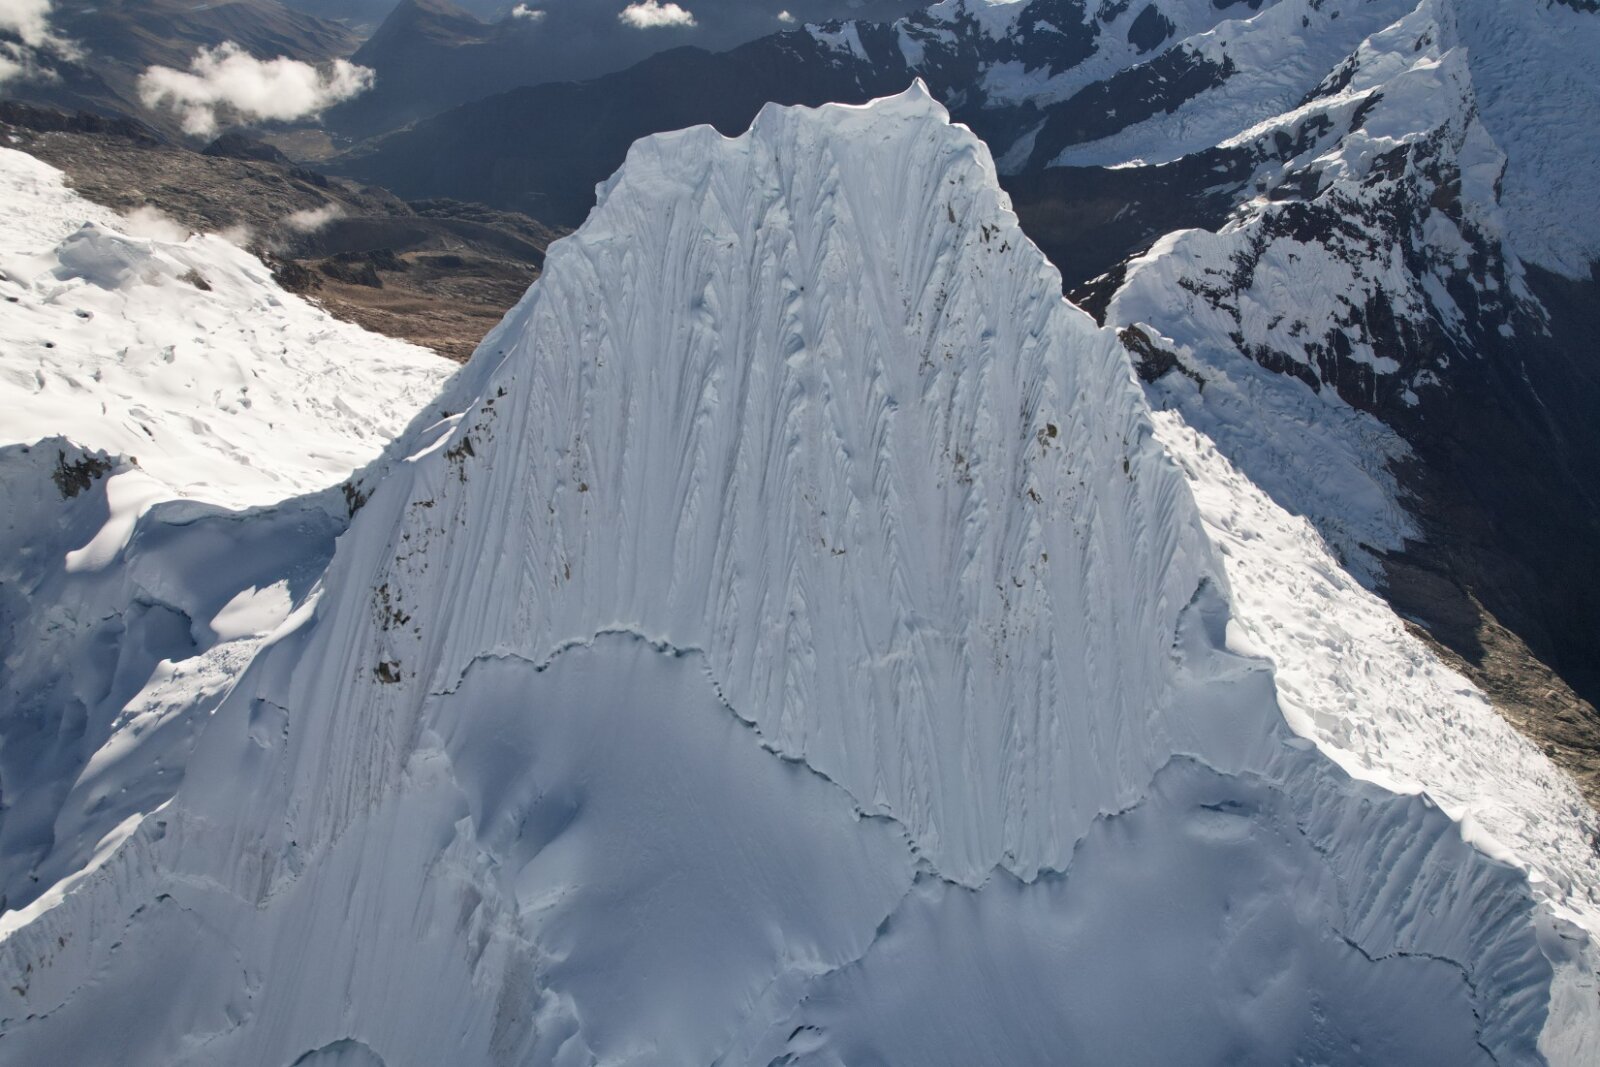 Drone footage of the summit of Alpamayo